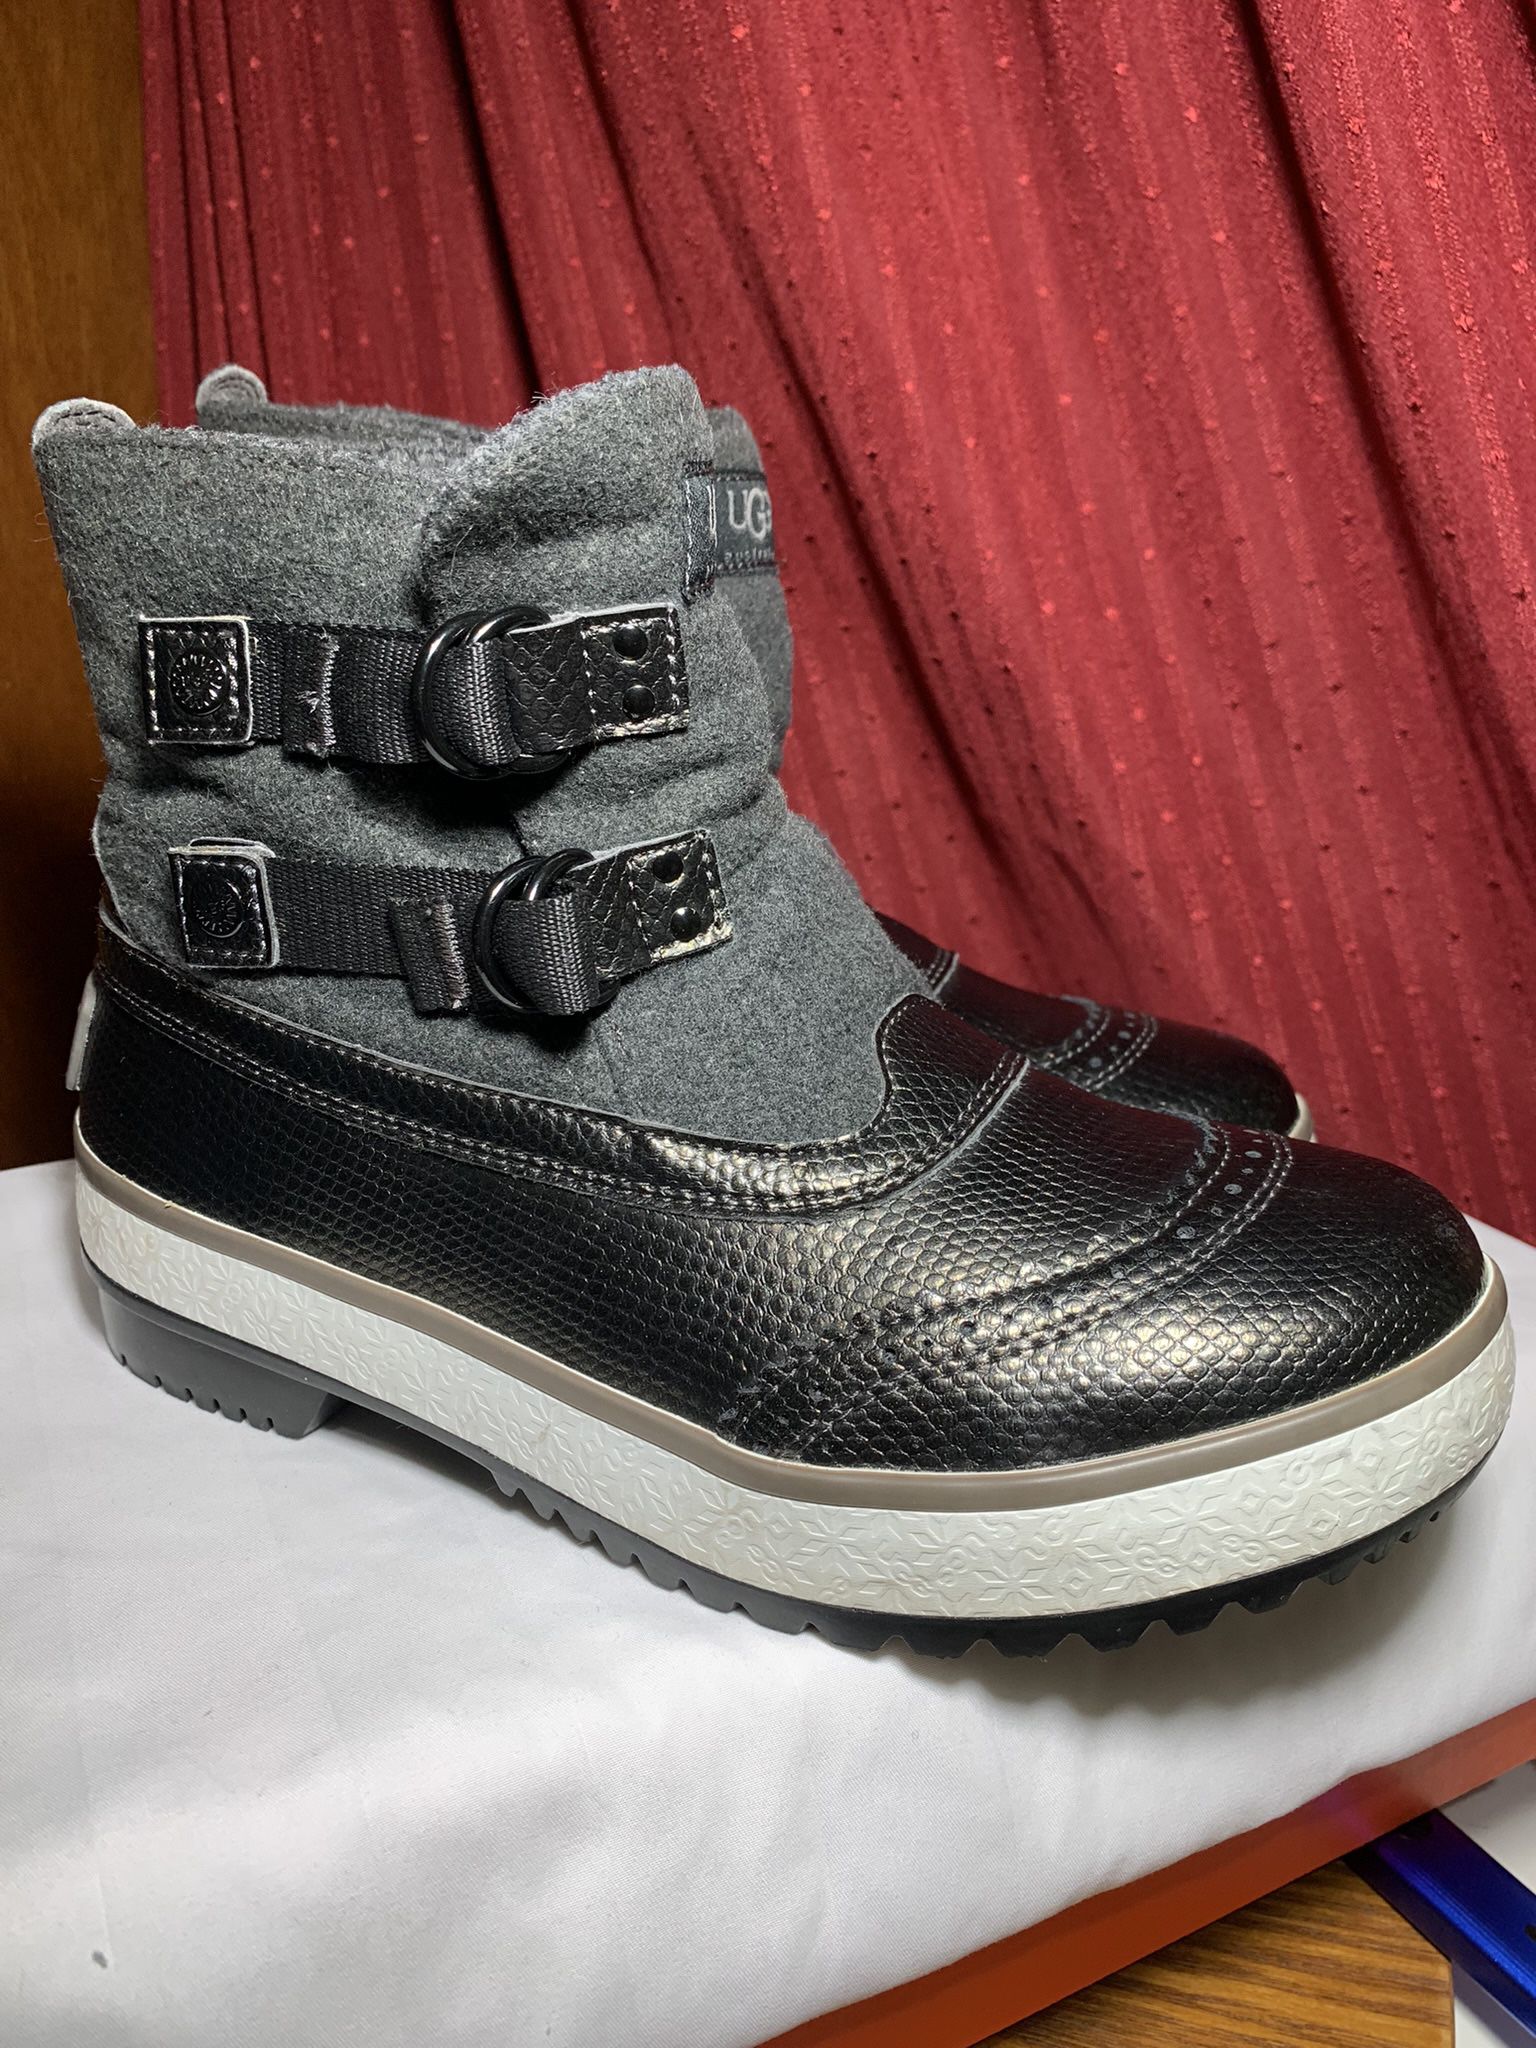 Ugg Australia Marais ~ Waterproof Winter Boots. Women’s Size 6.